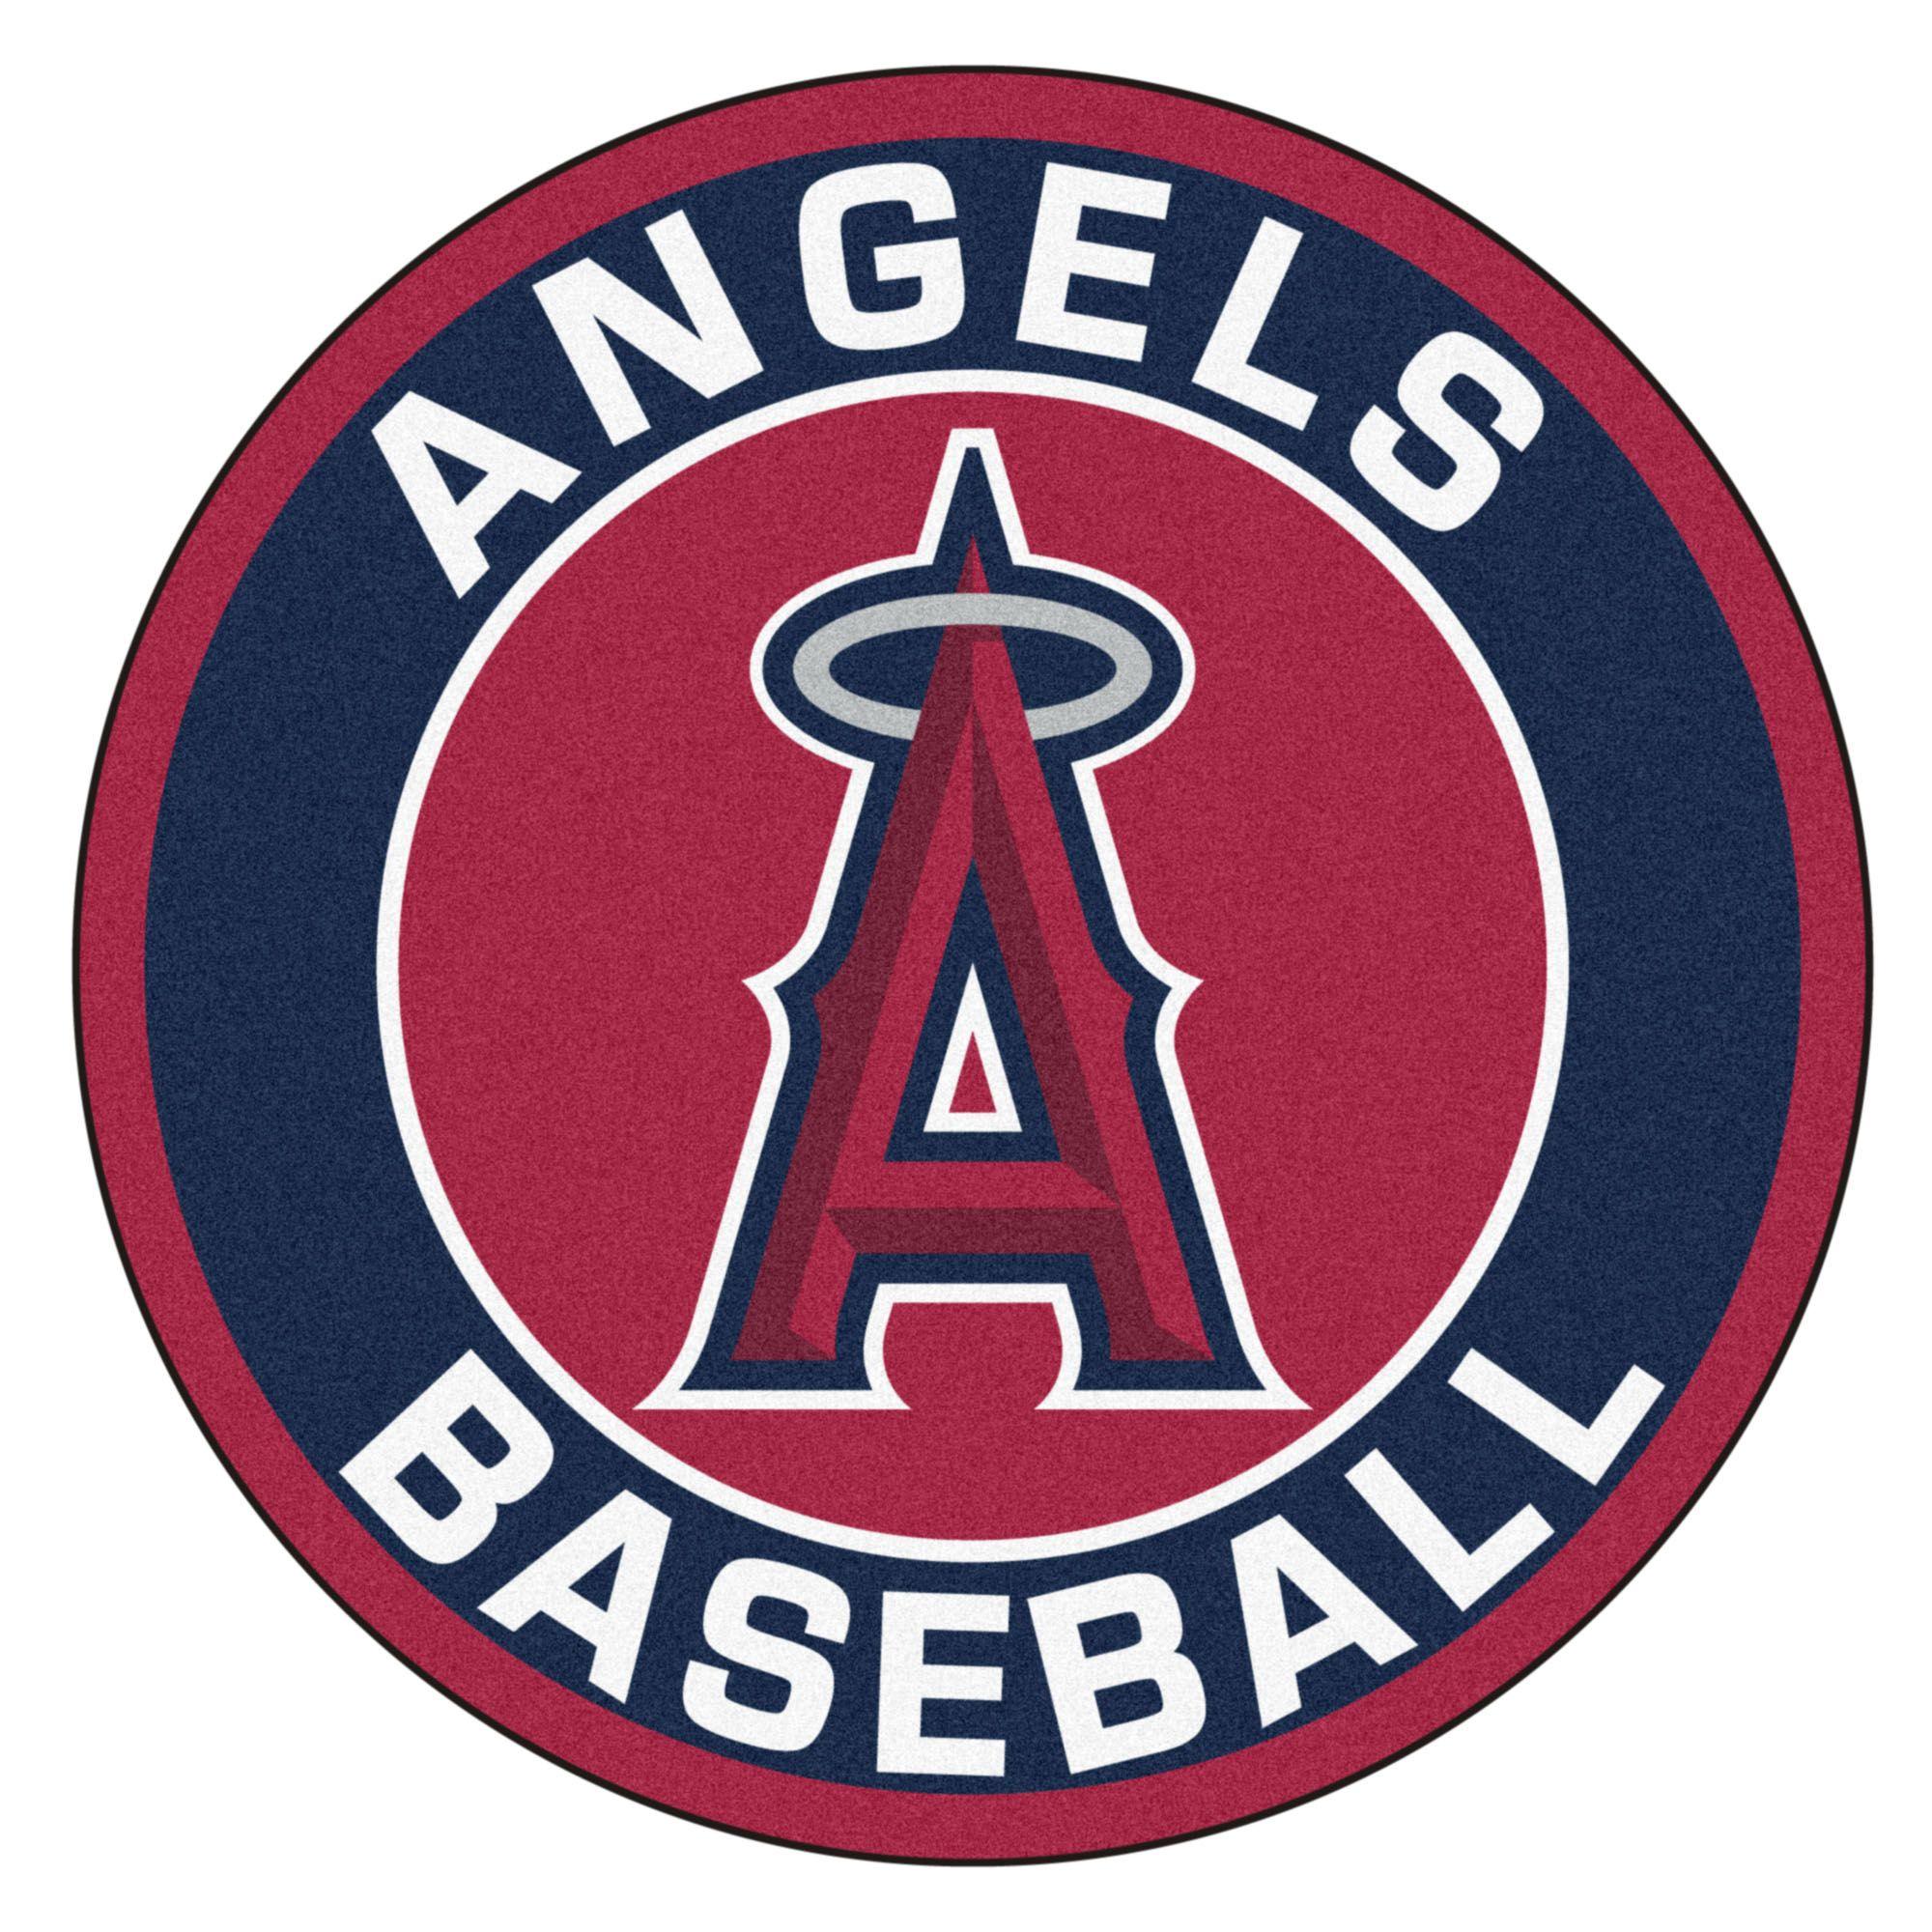 MLB Angels Logo - Los angeles angels Logos